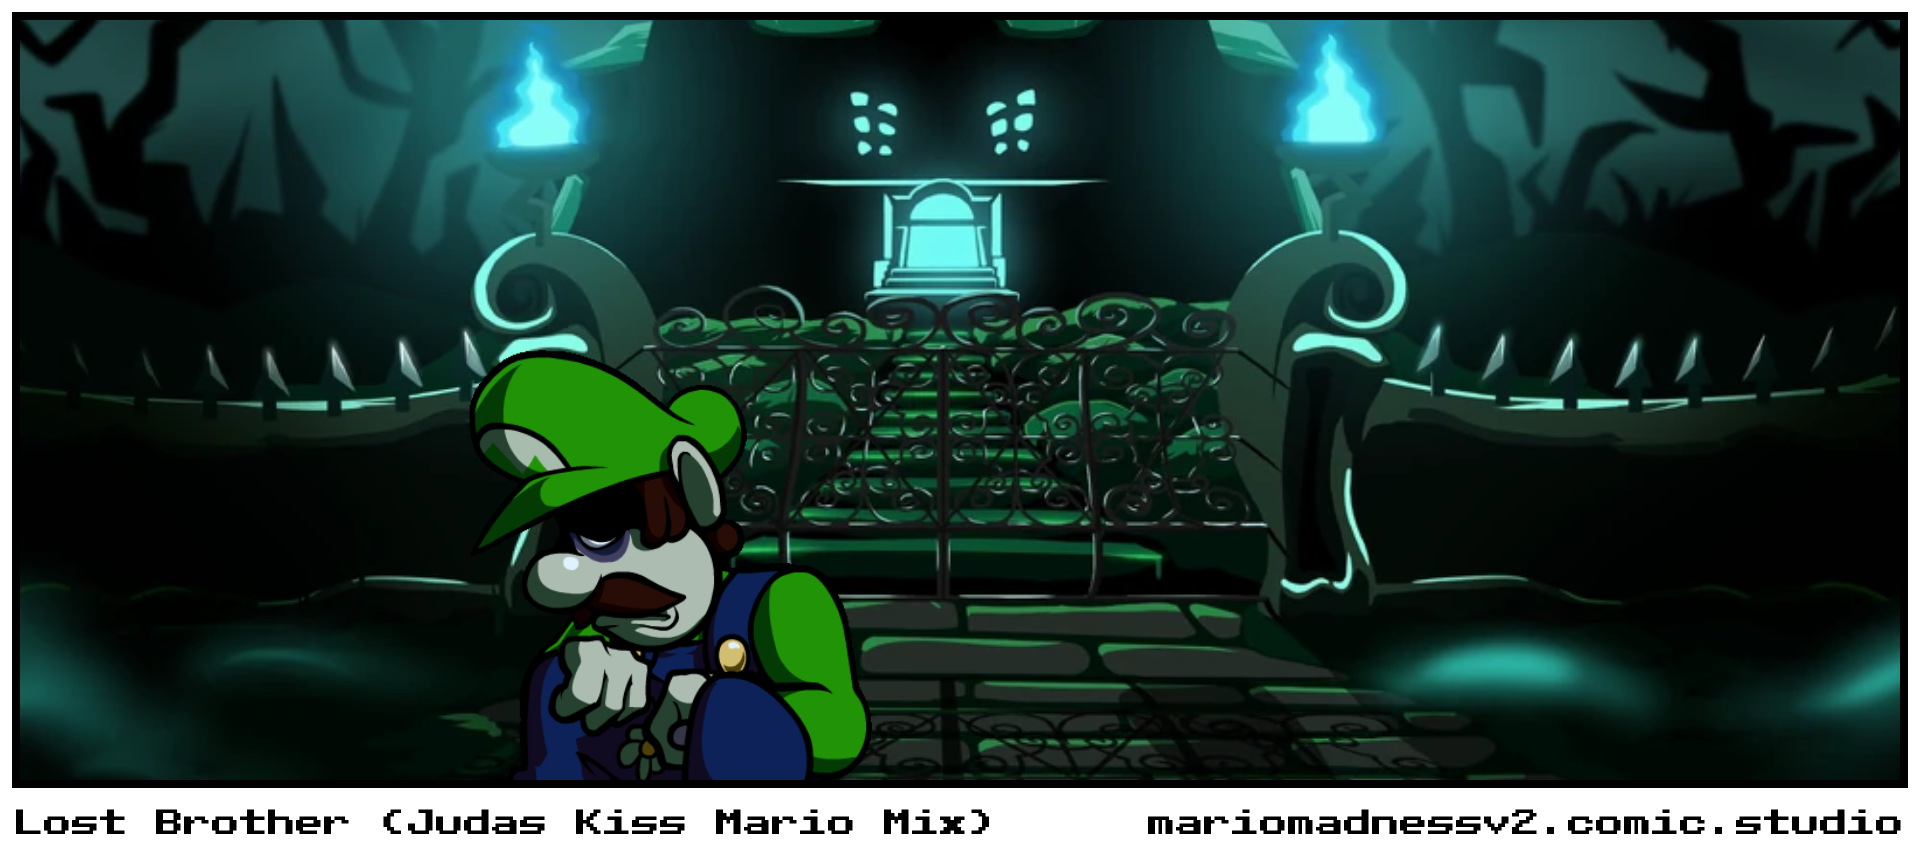 Lost Brother (Judas Kiss Mario Mix)